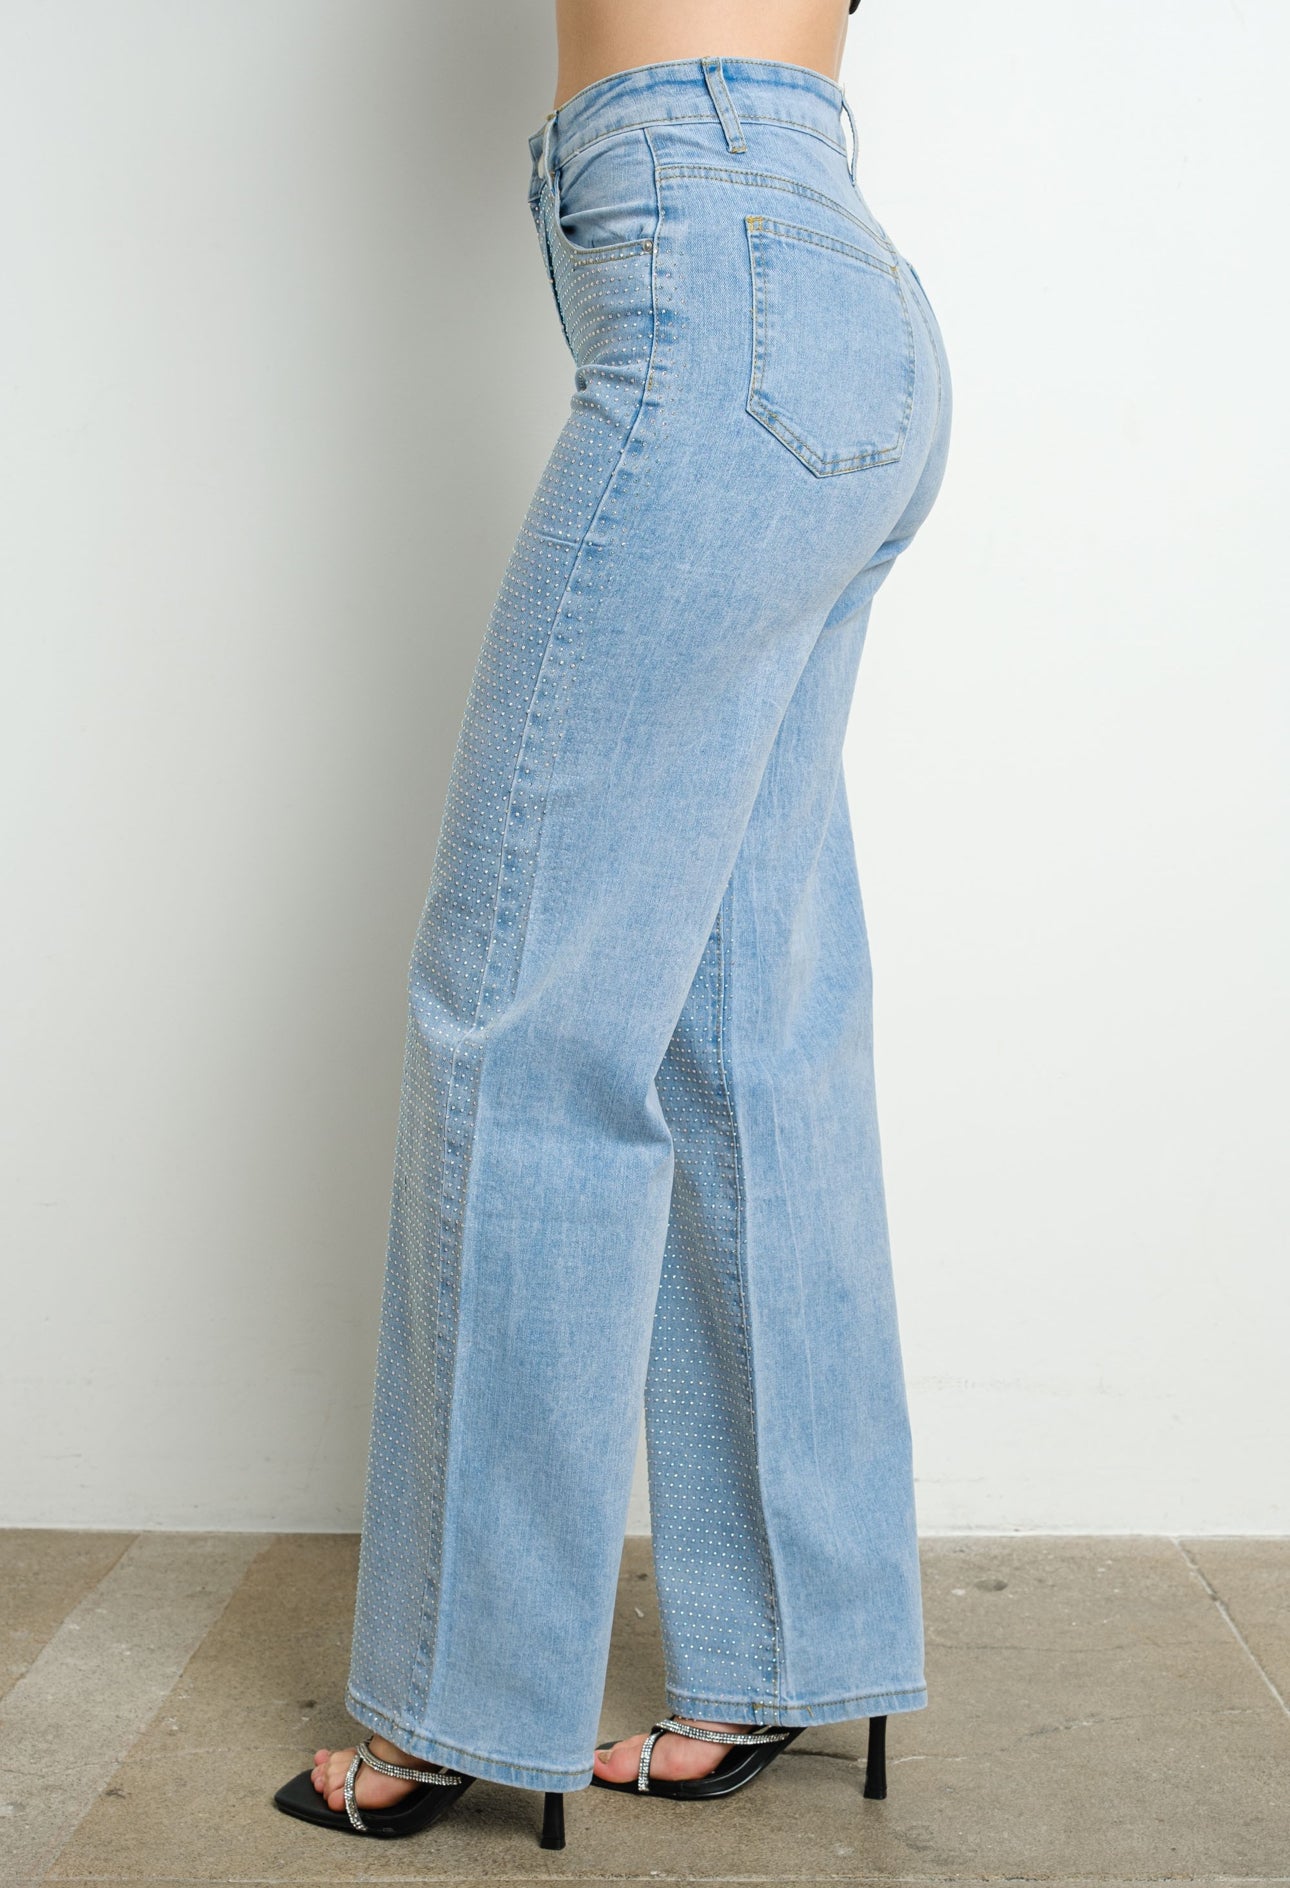 Rhinestone hotfix jeans